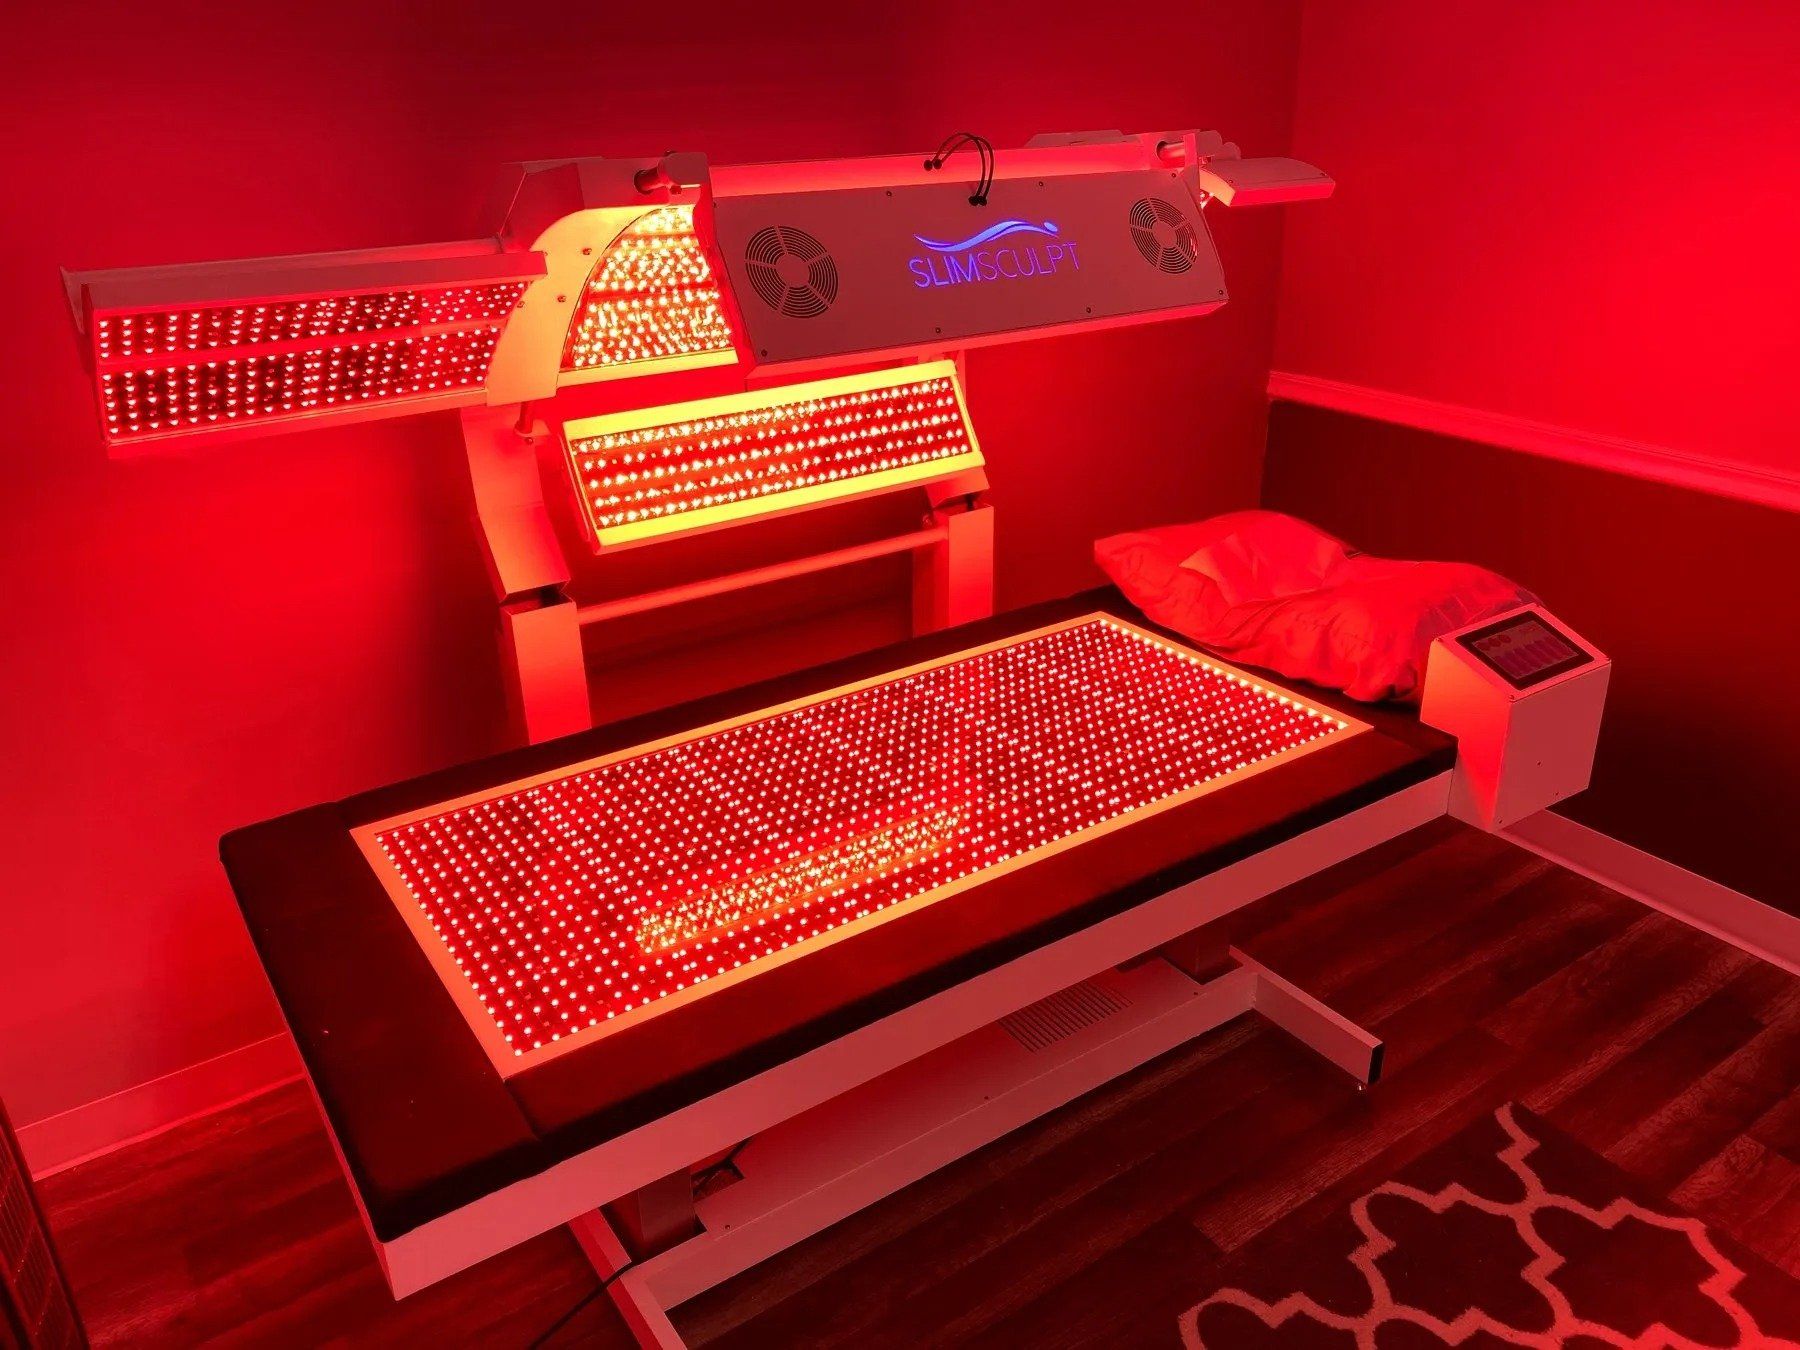 The Slim Scupt Bed at Kansas City Laser-Like Lipo lit up